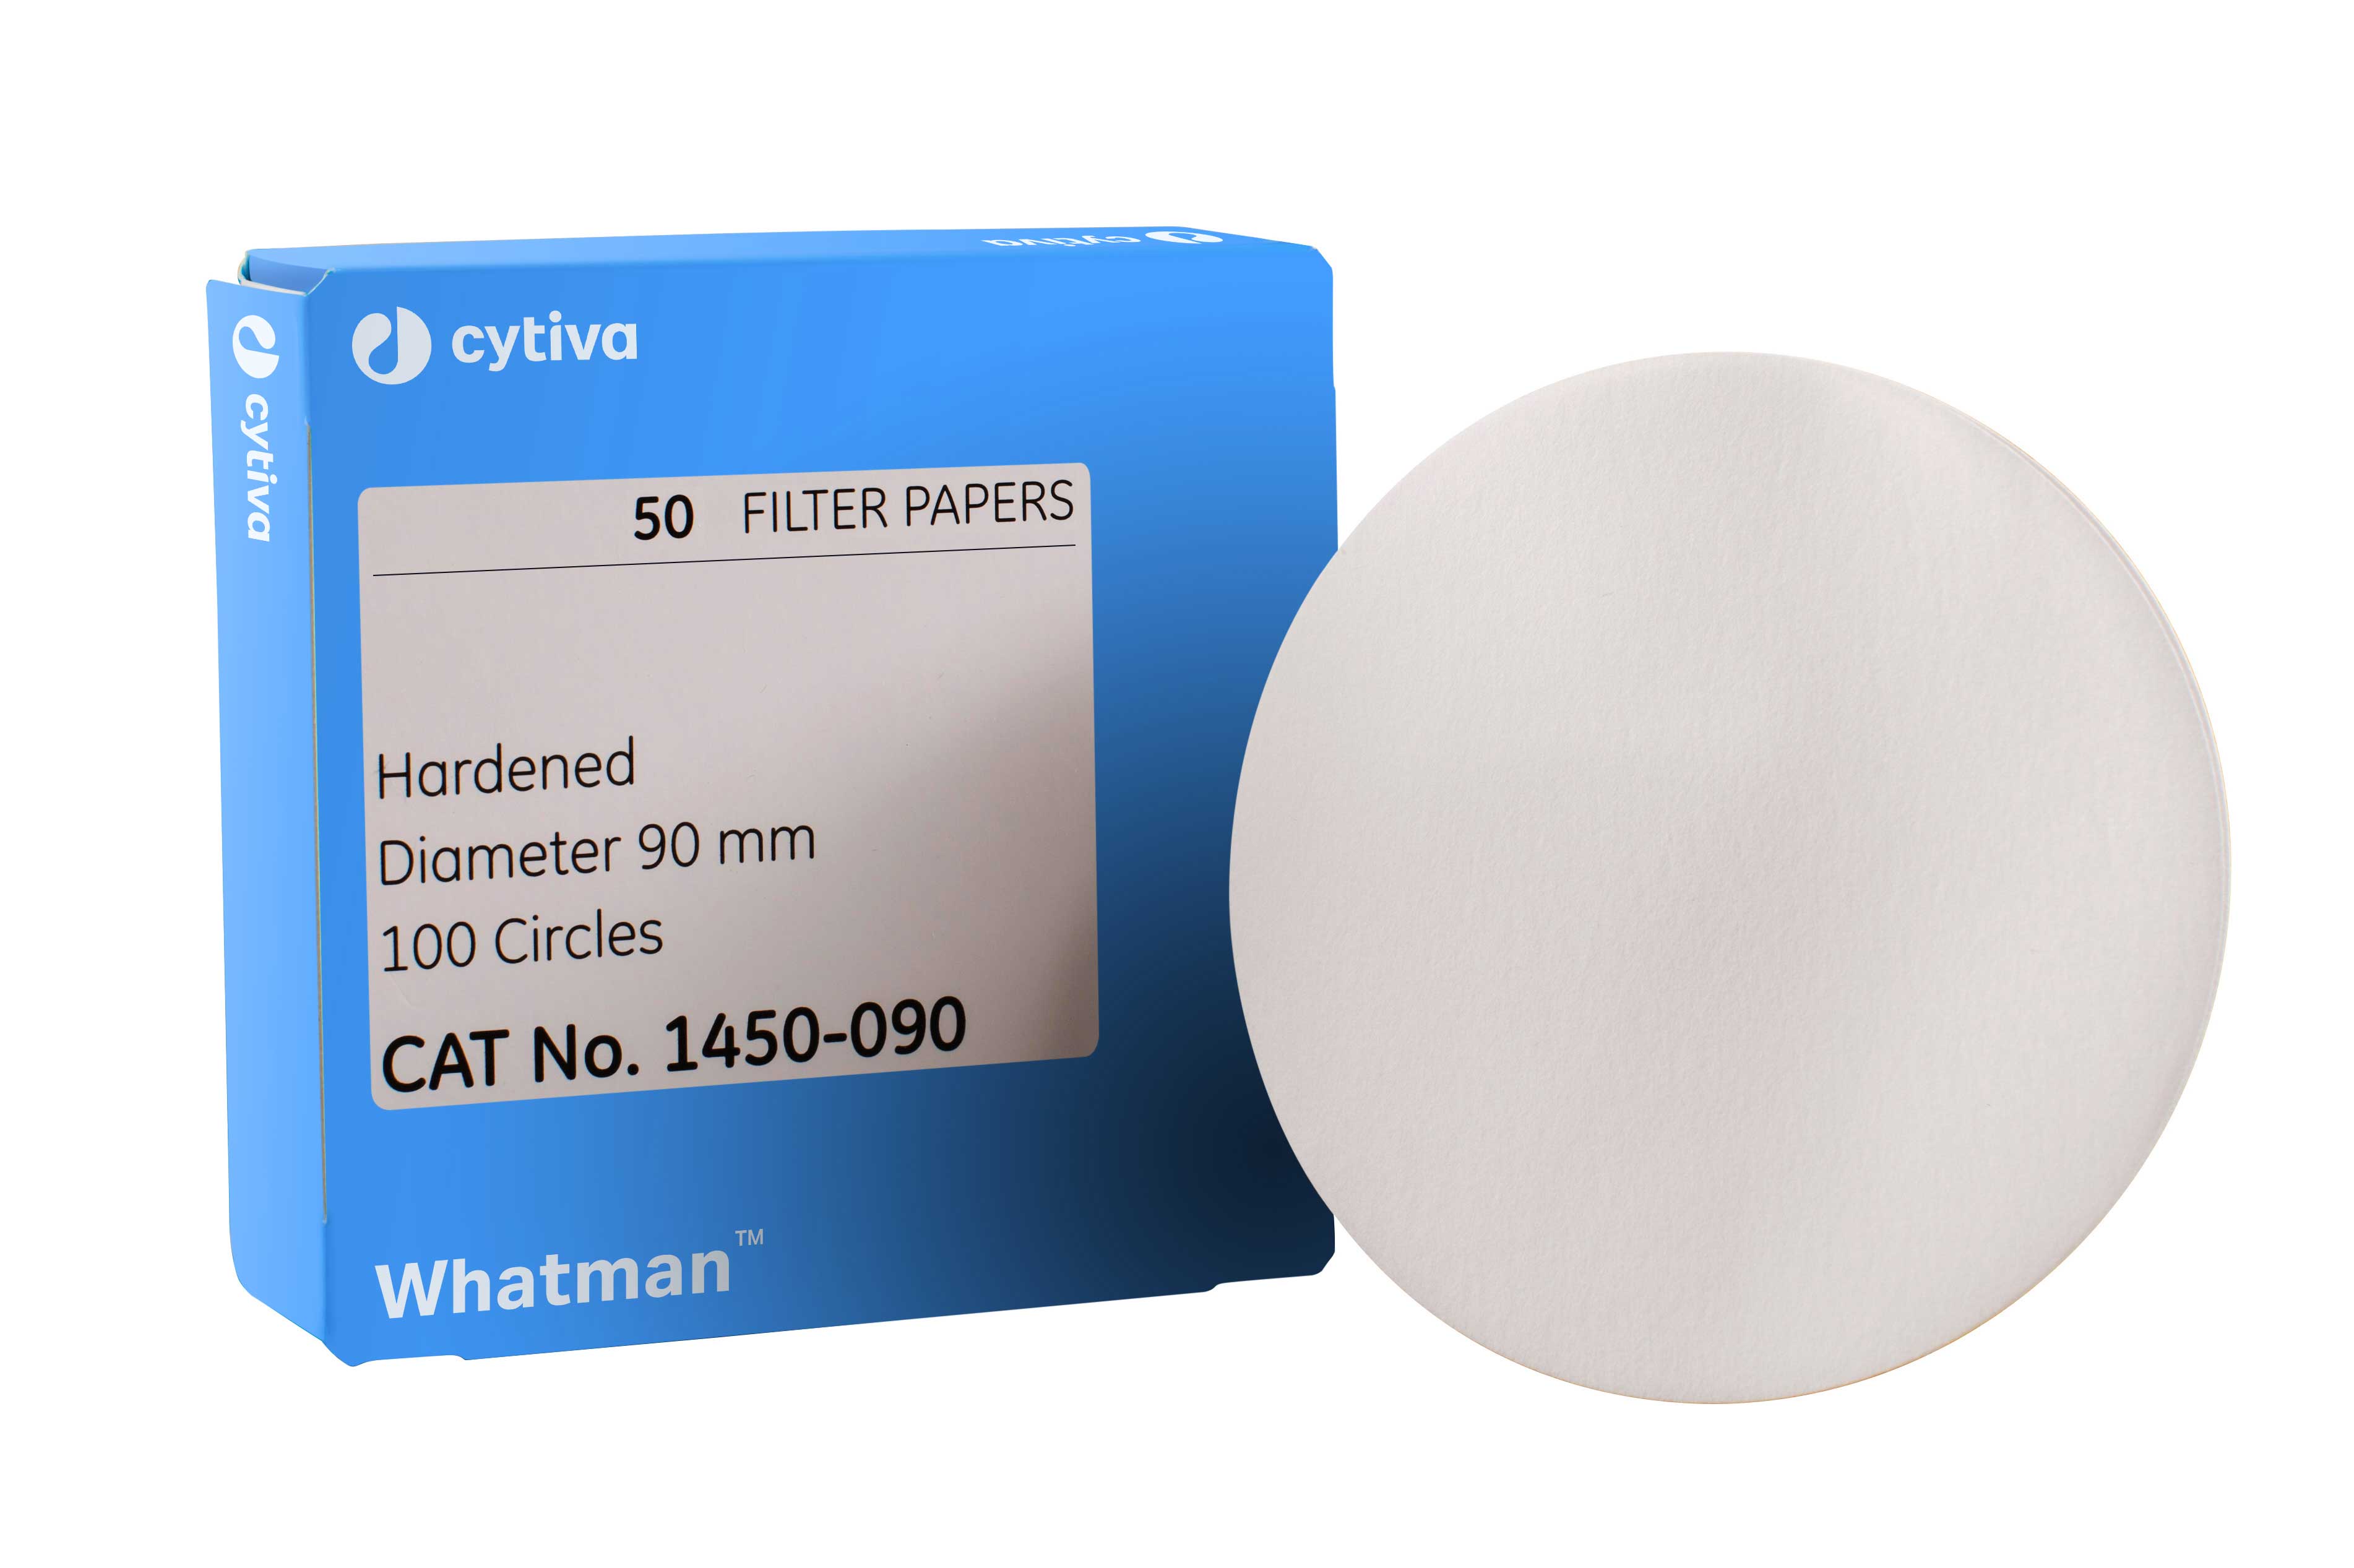 Filtro de papel de celulosa pura. Whatman™ (Cytiva). Disco Grado 50 Celulosa pura sin cenizas. Ø (mm): 110. Retención típica (µm): 2,7